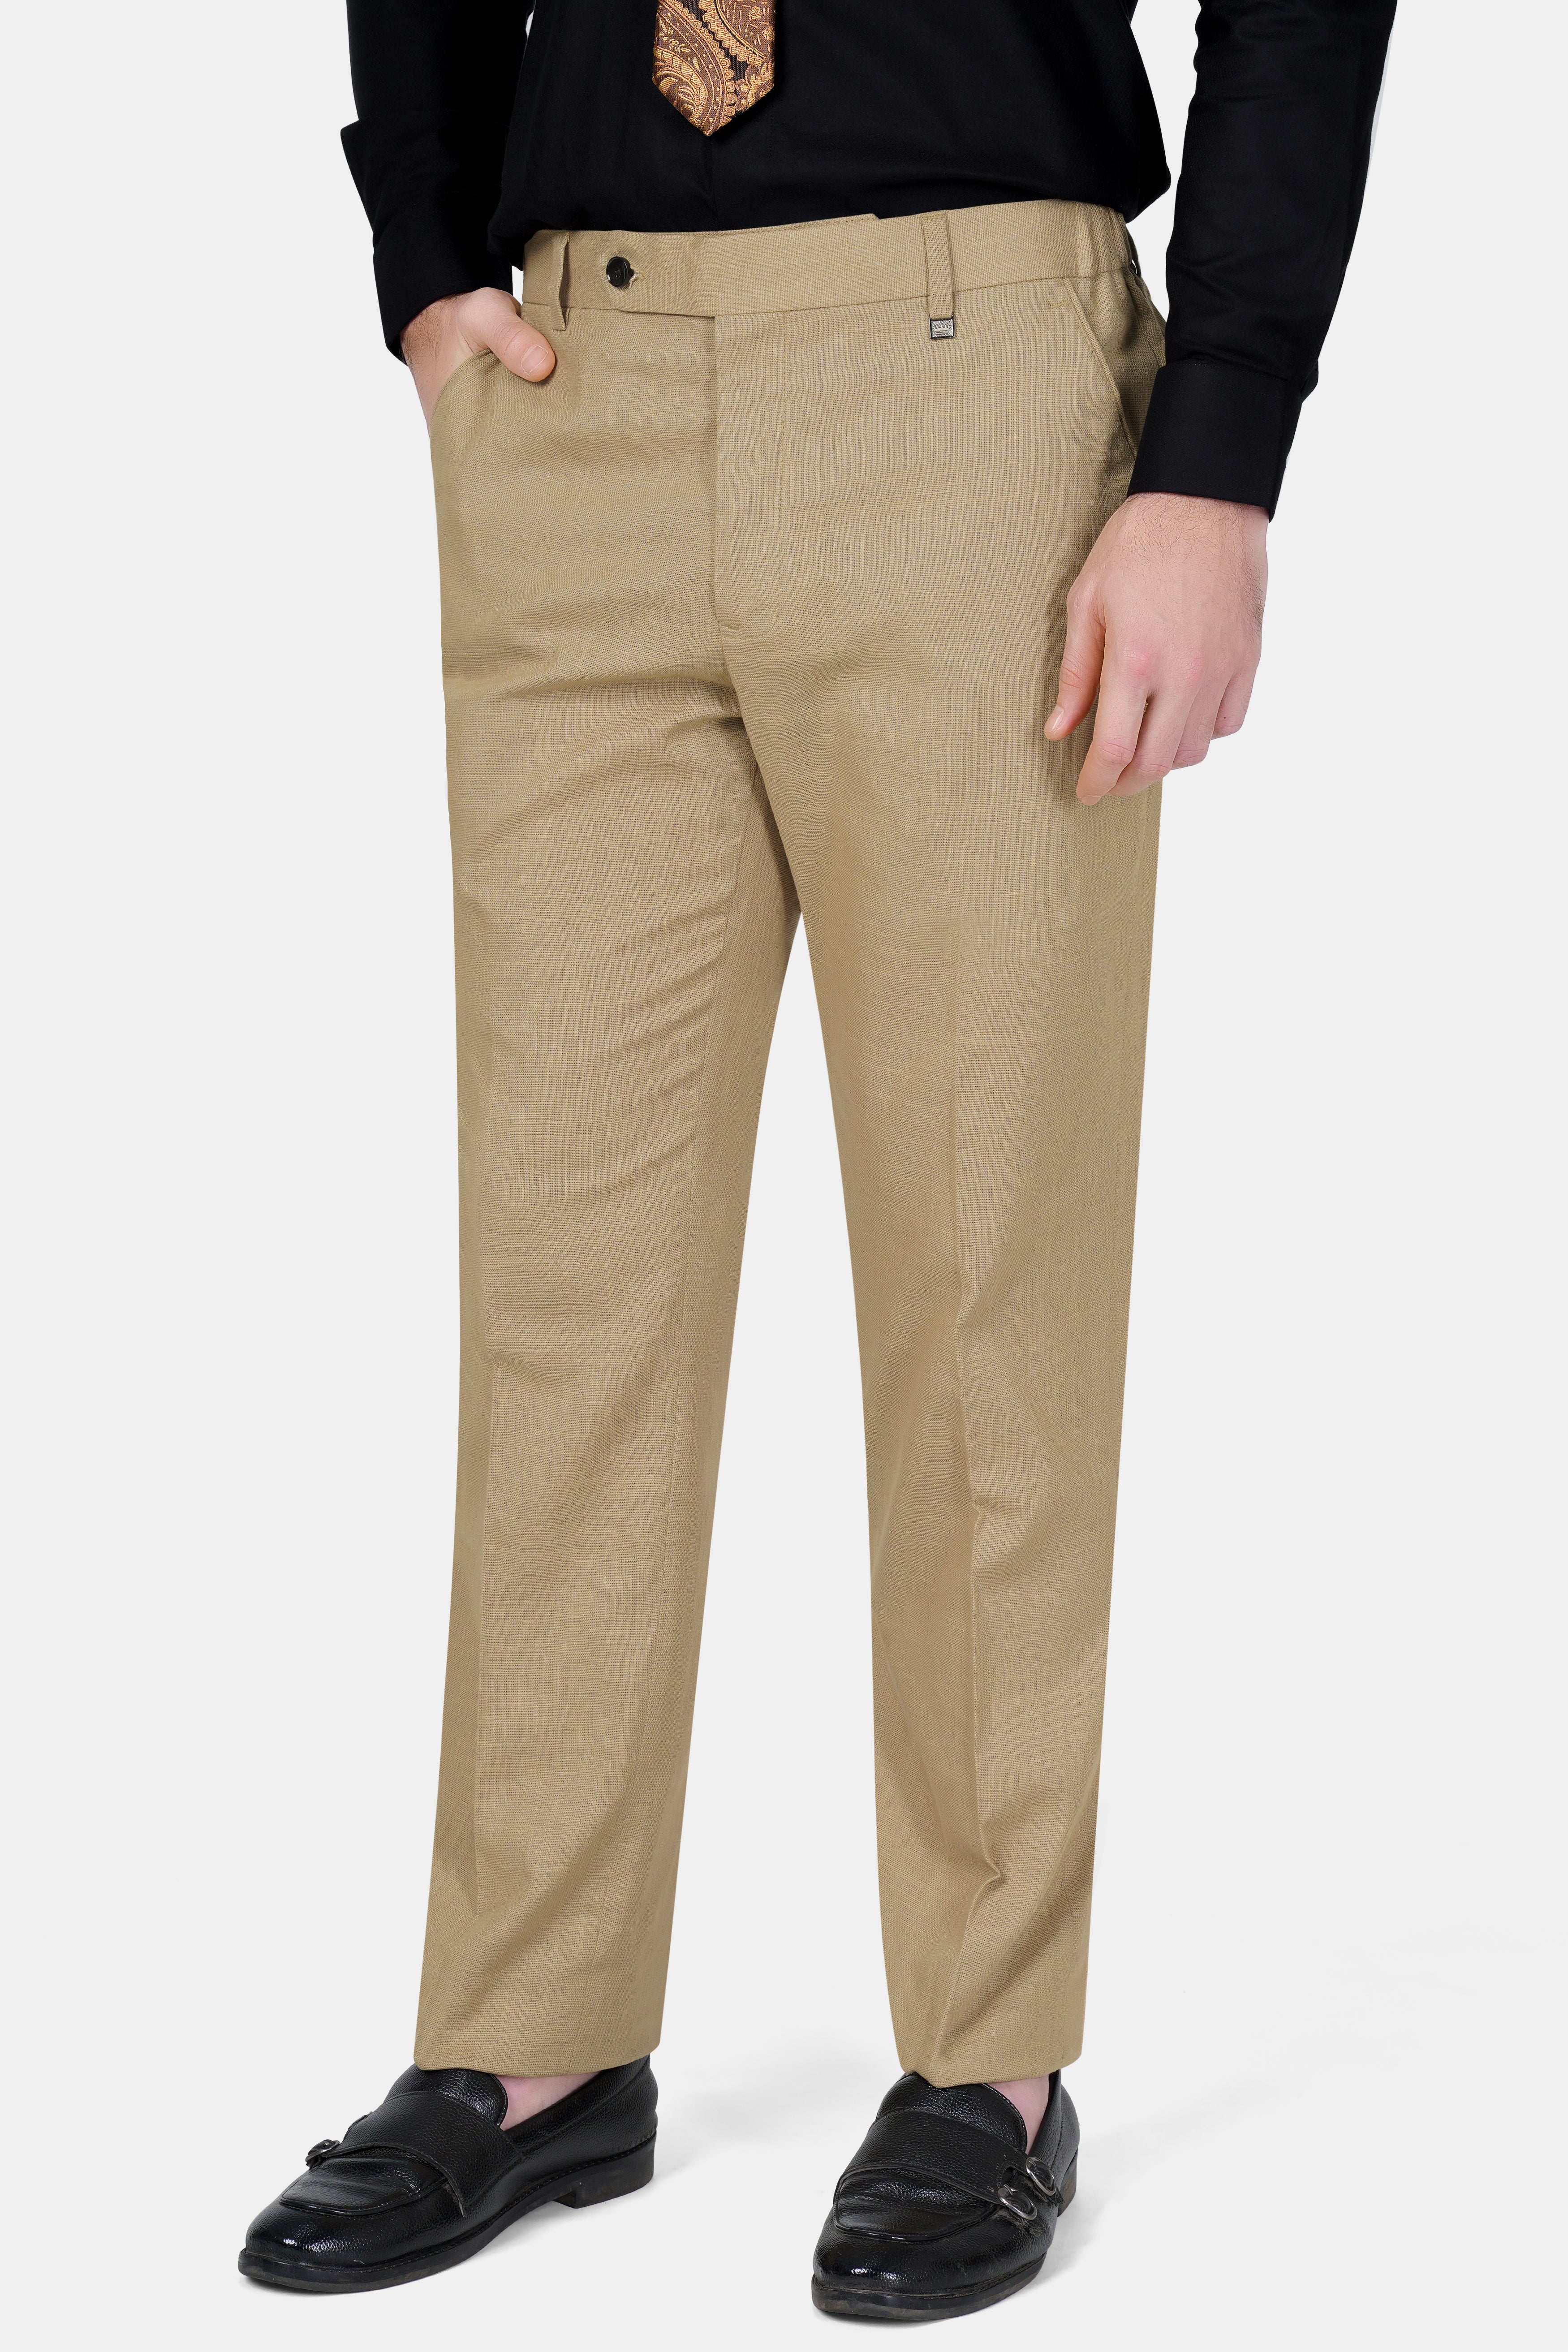 Sandrift Brown Luxurious Linen Stretchable Waistband Pant